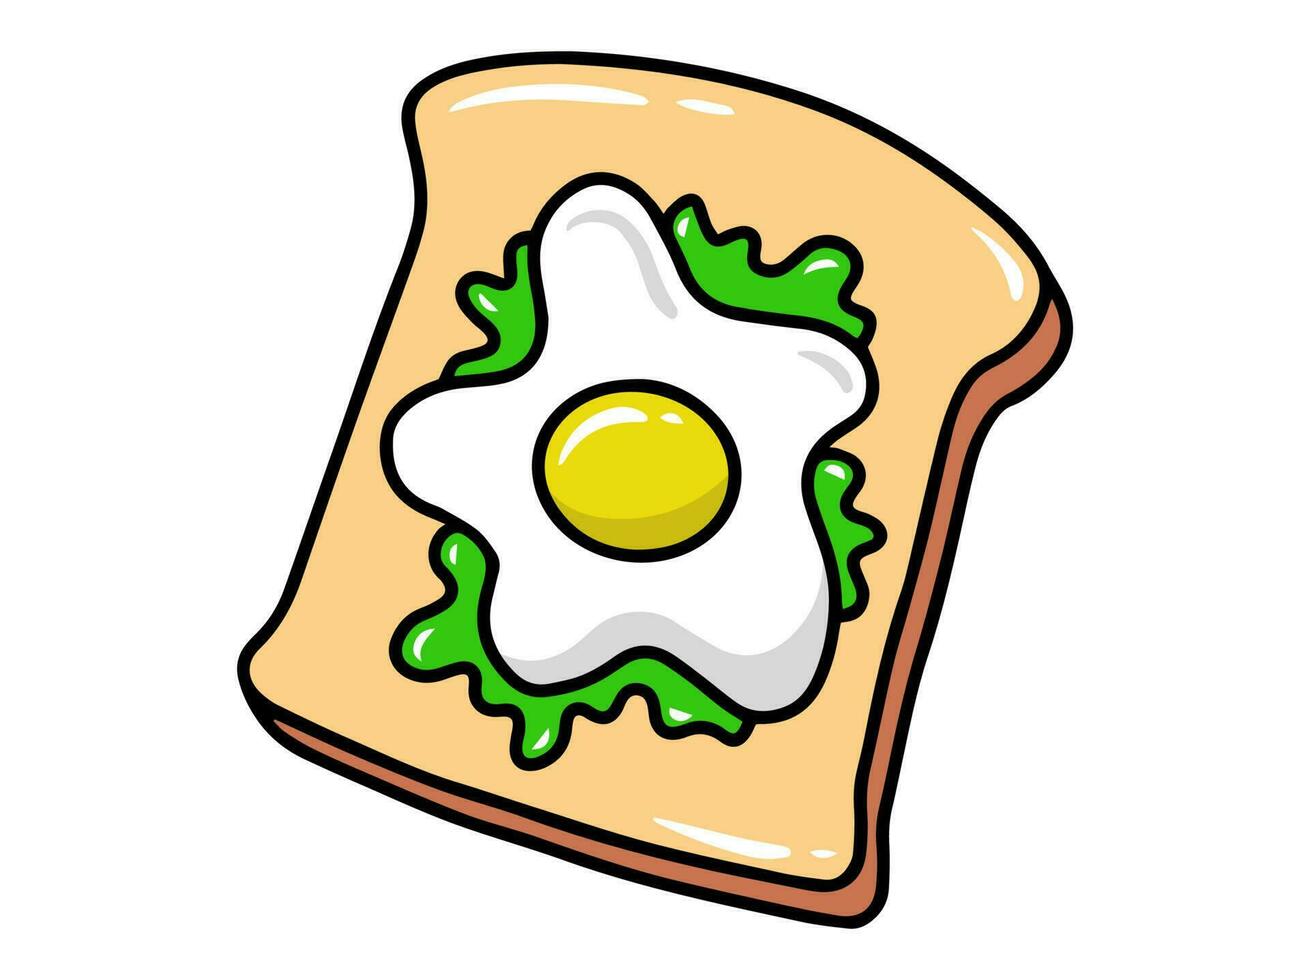 Bread, Egg and Vegetable Illustration vector